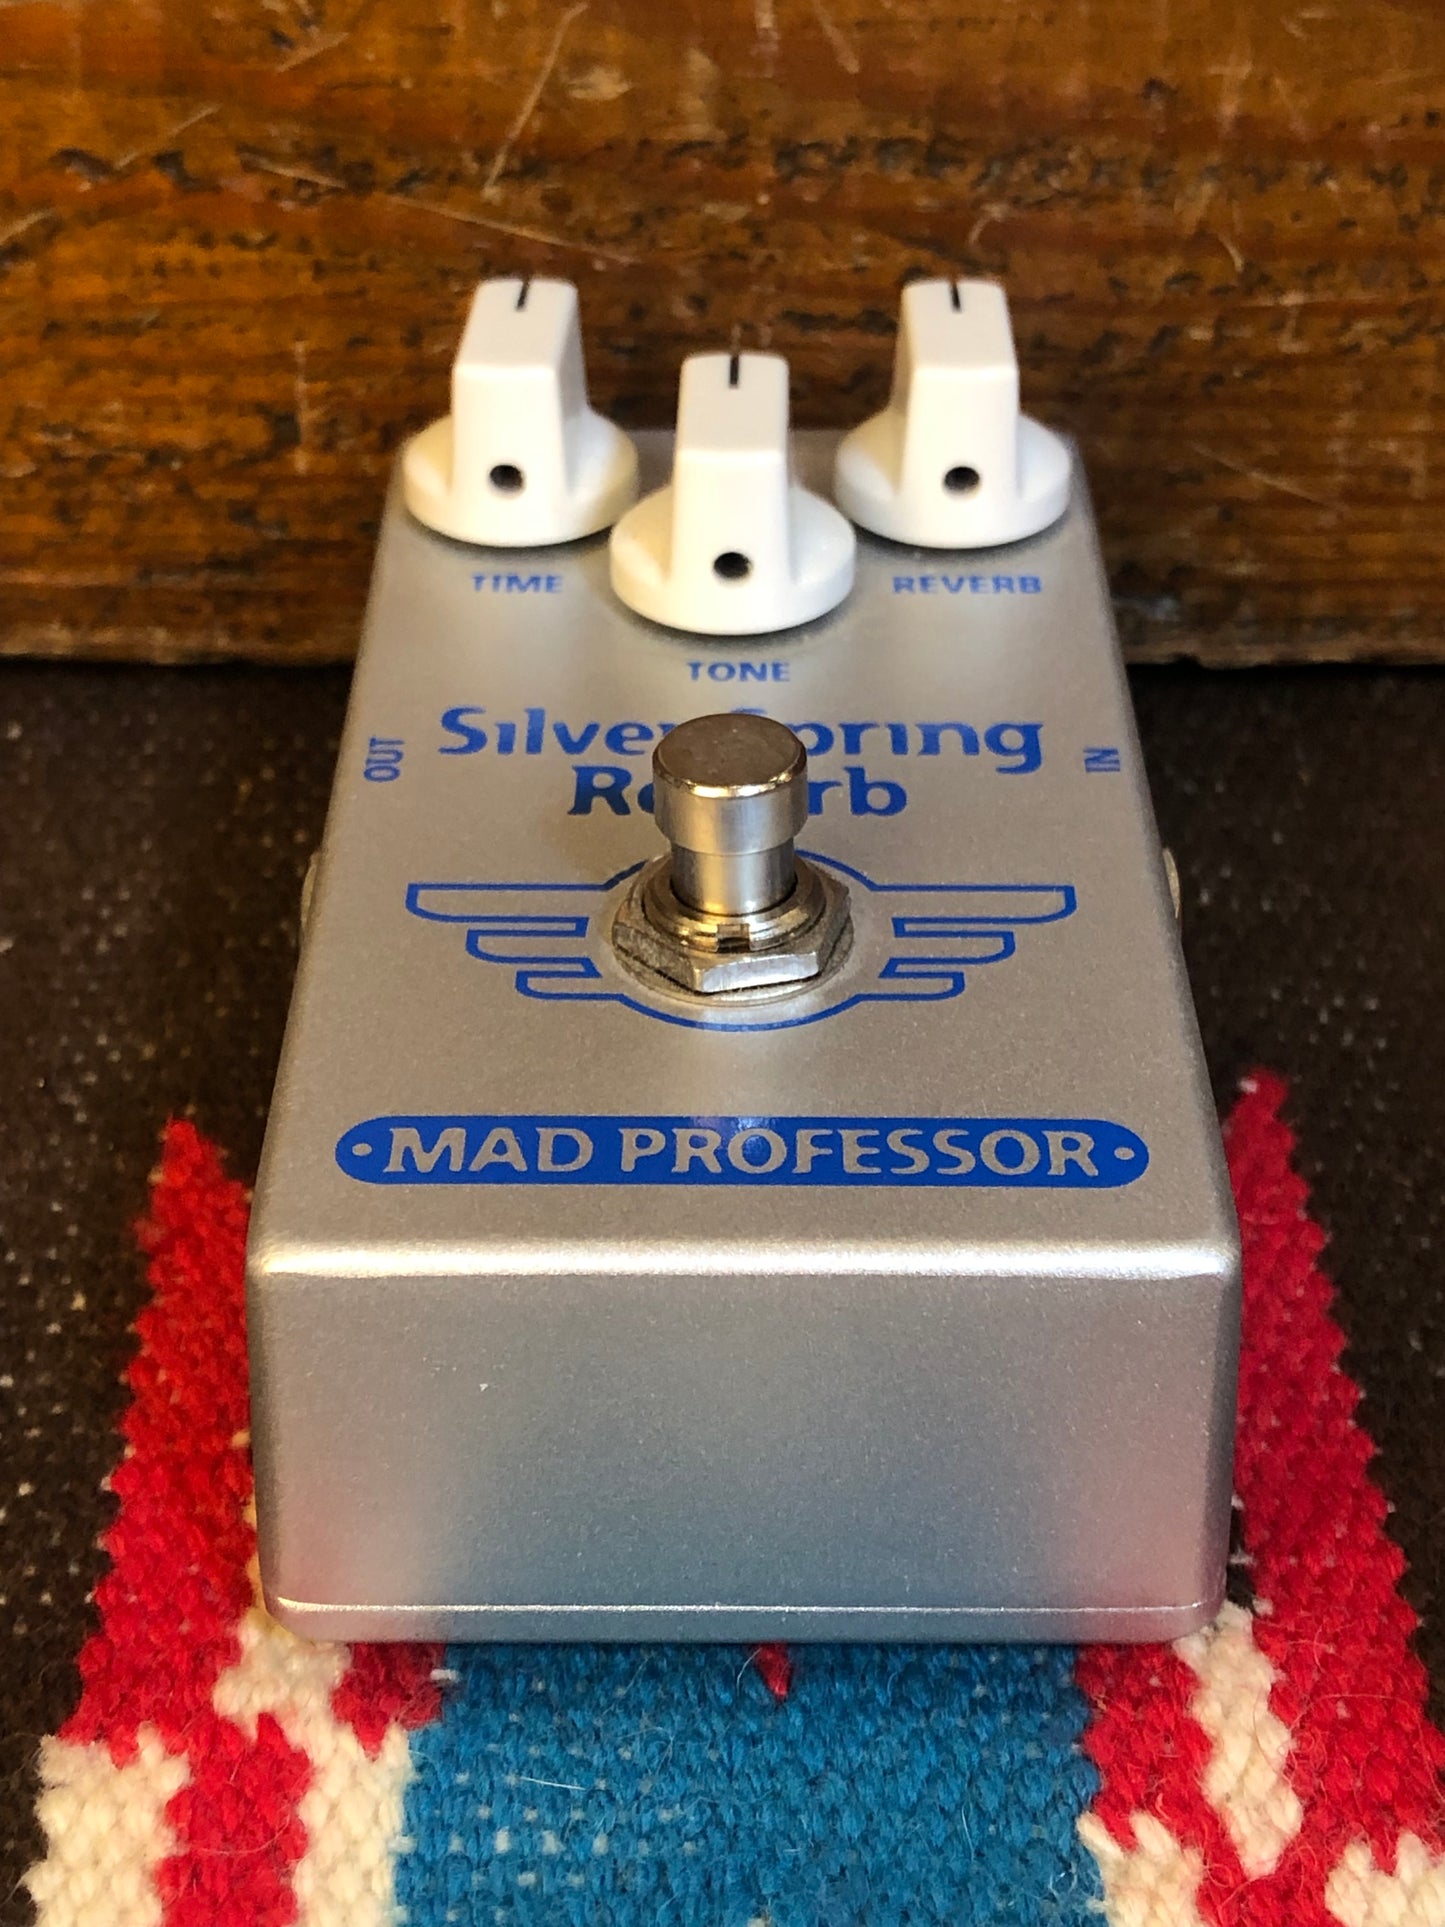 Mad Professor Silver Spring Reverb Pedal w/ Box